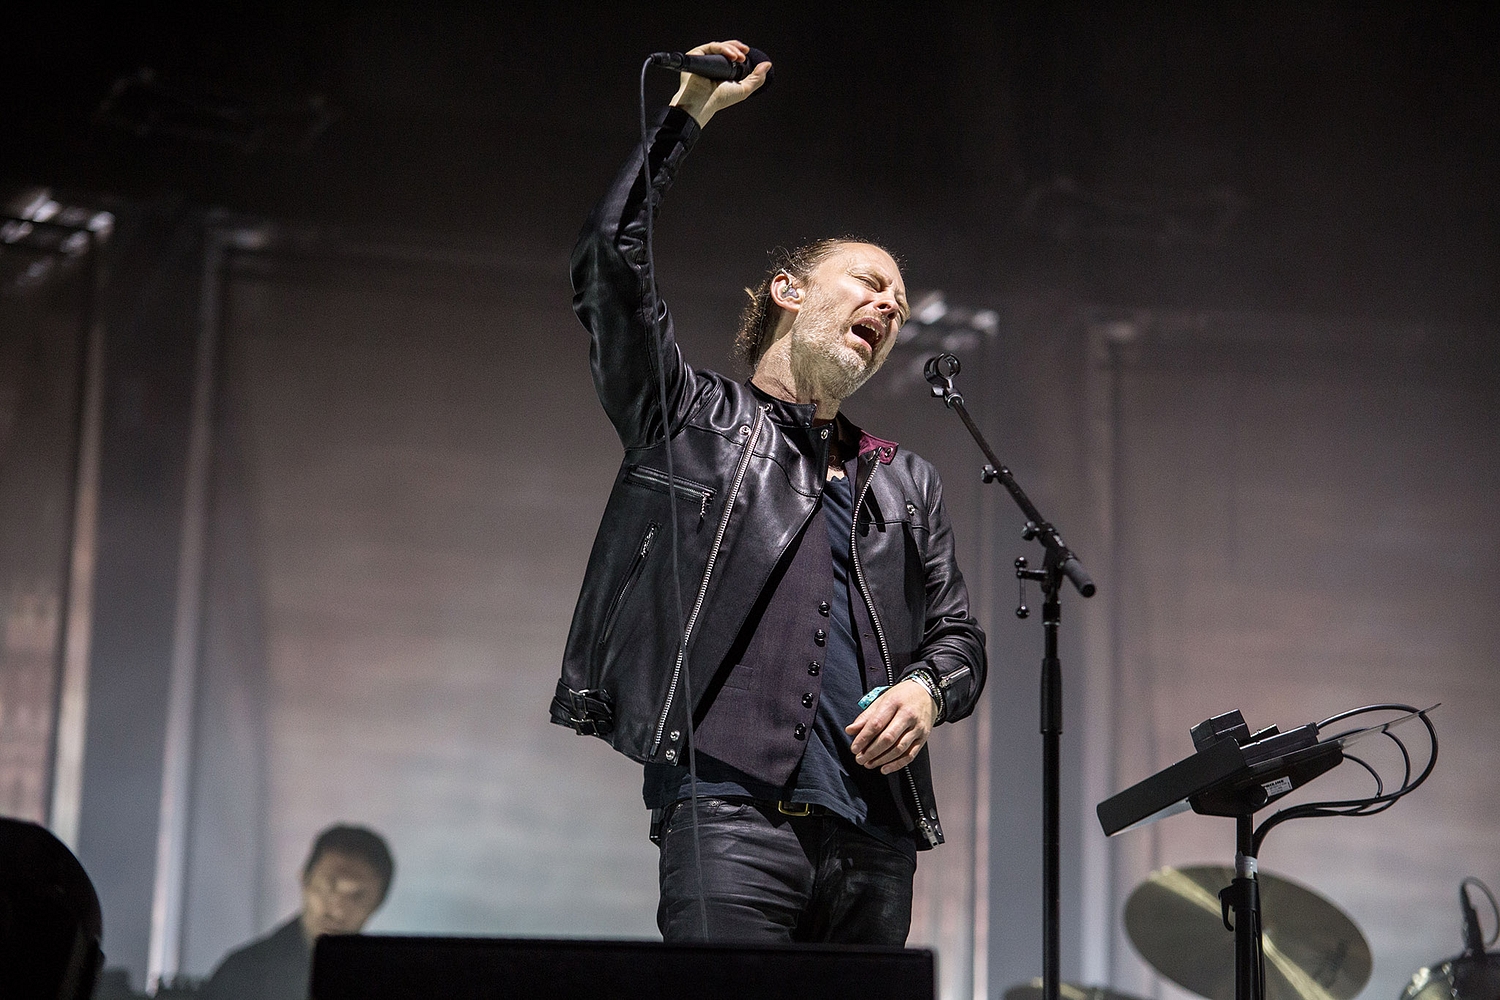 Radiohead are headlining Glastonbury 2017's Friday night